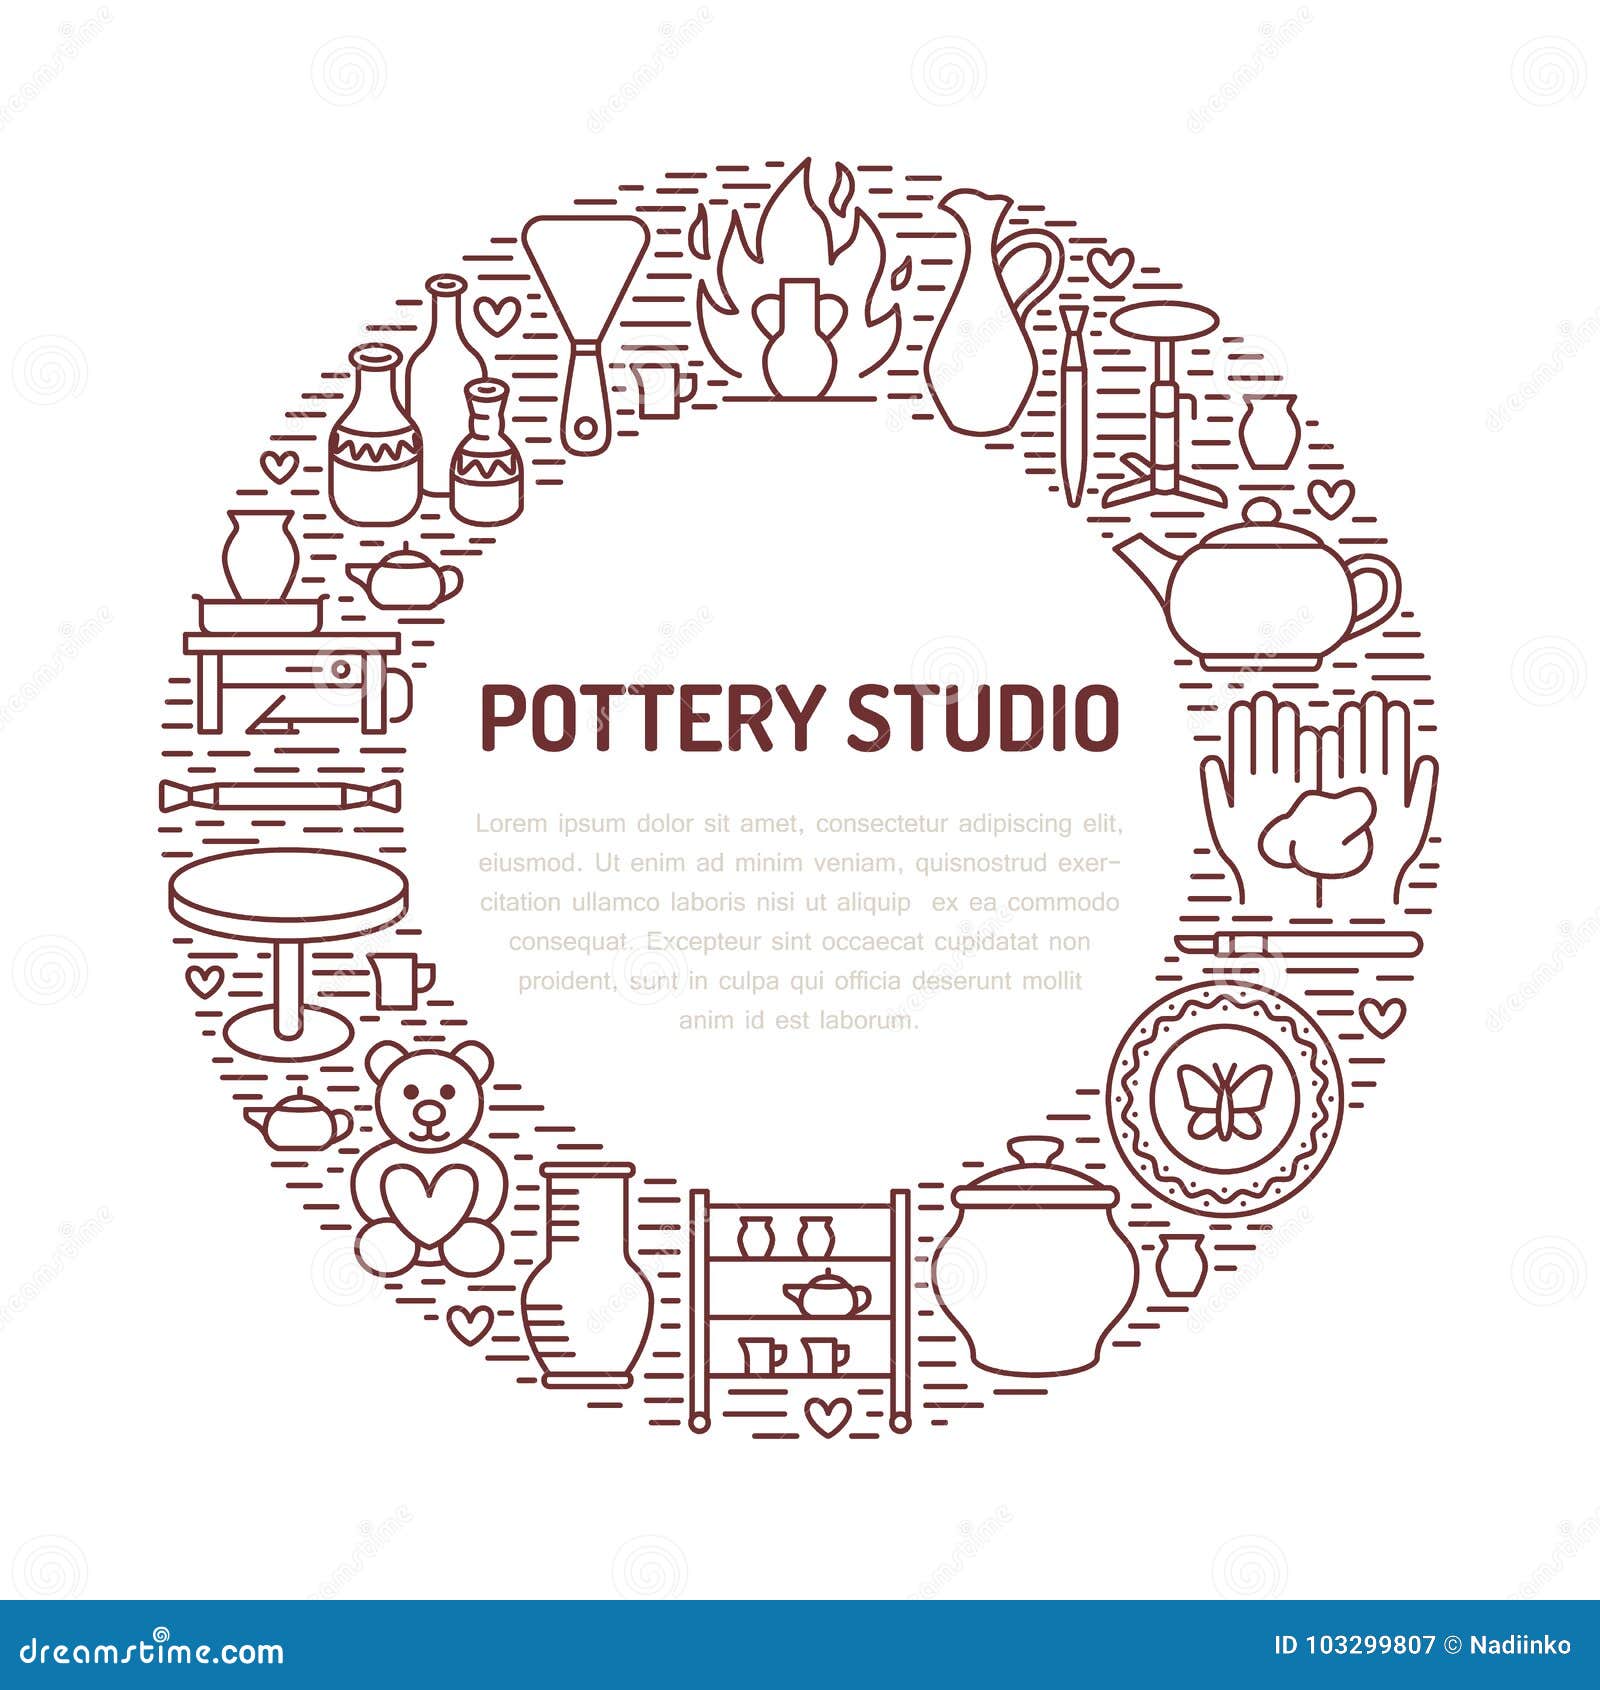 pottery studio ideas Ceramics  Studio layout, Pottery studio, Studio setup